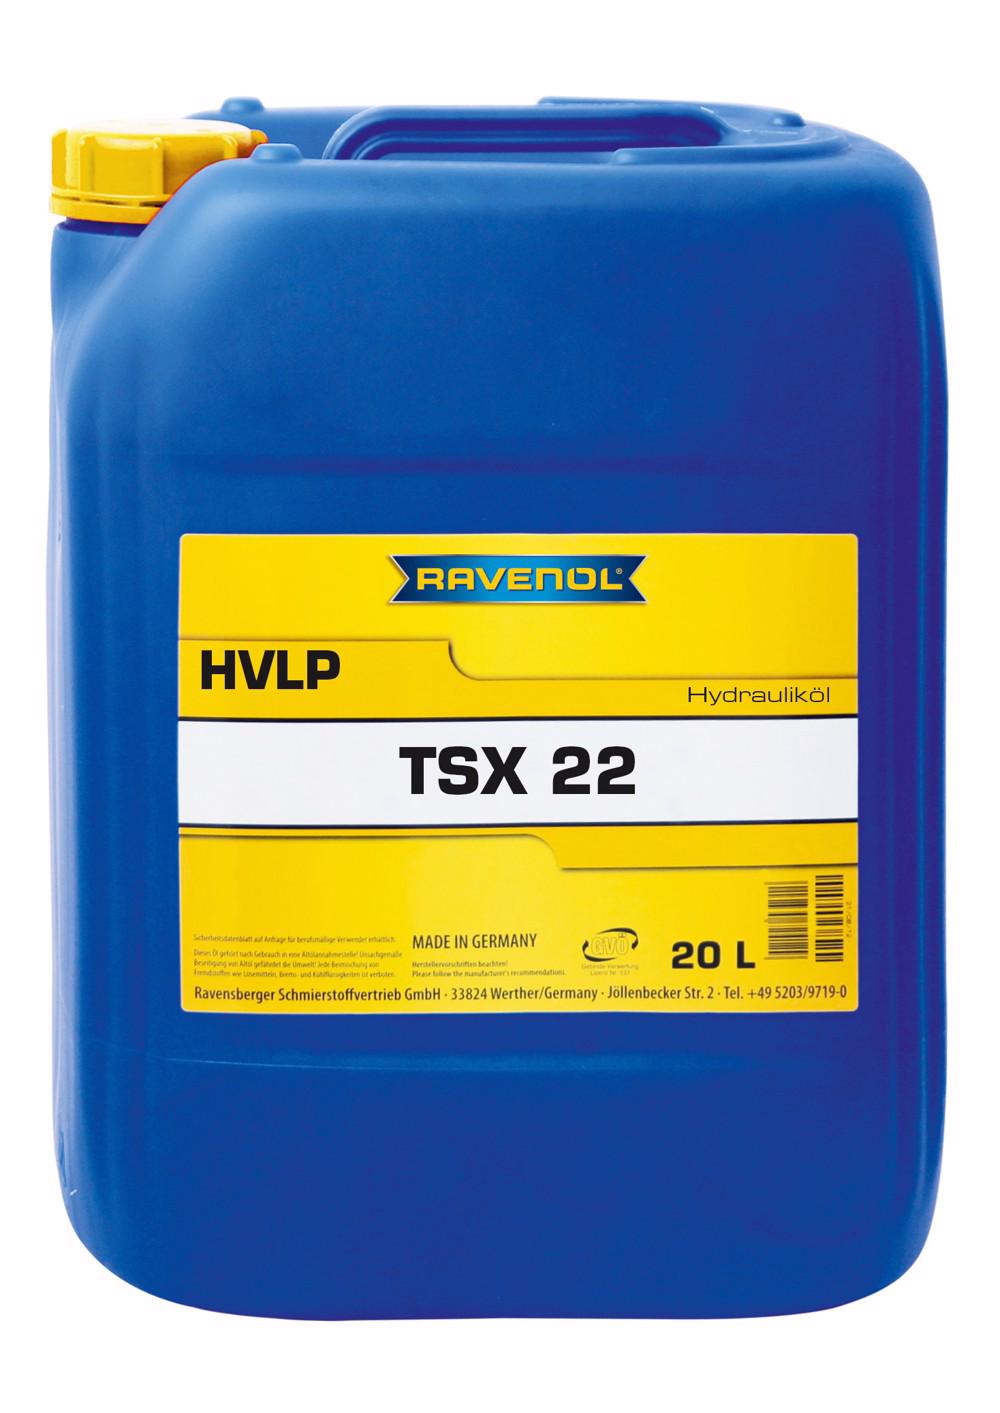 RAVENOL Hydraulikoel TSX 22 (HVLP)  20 L